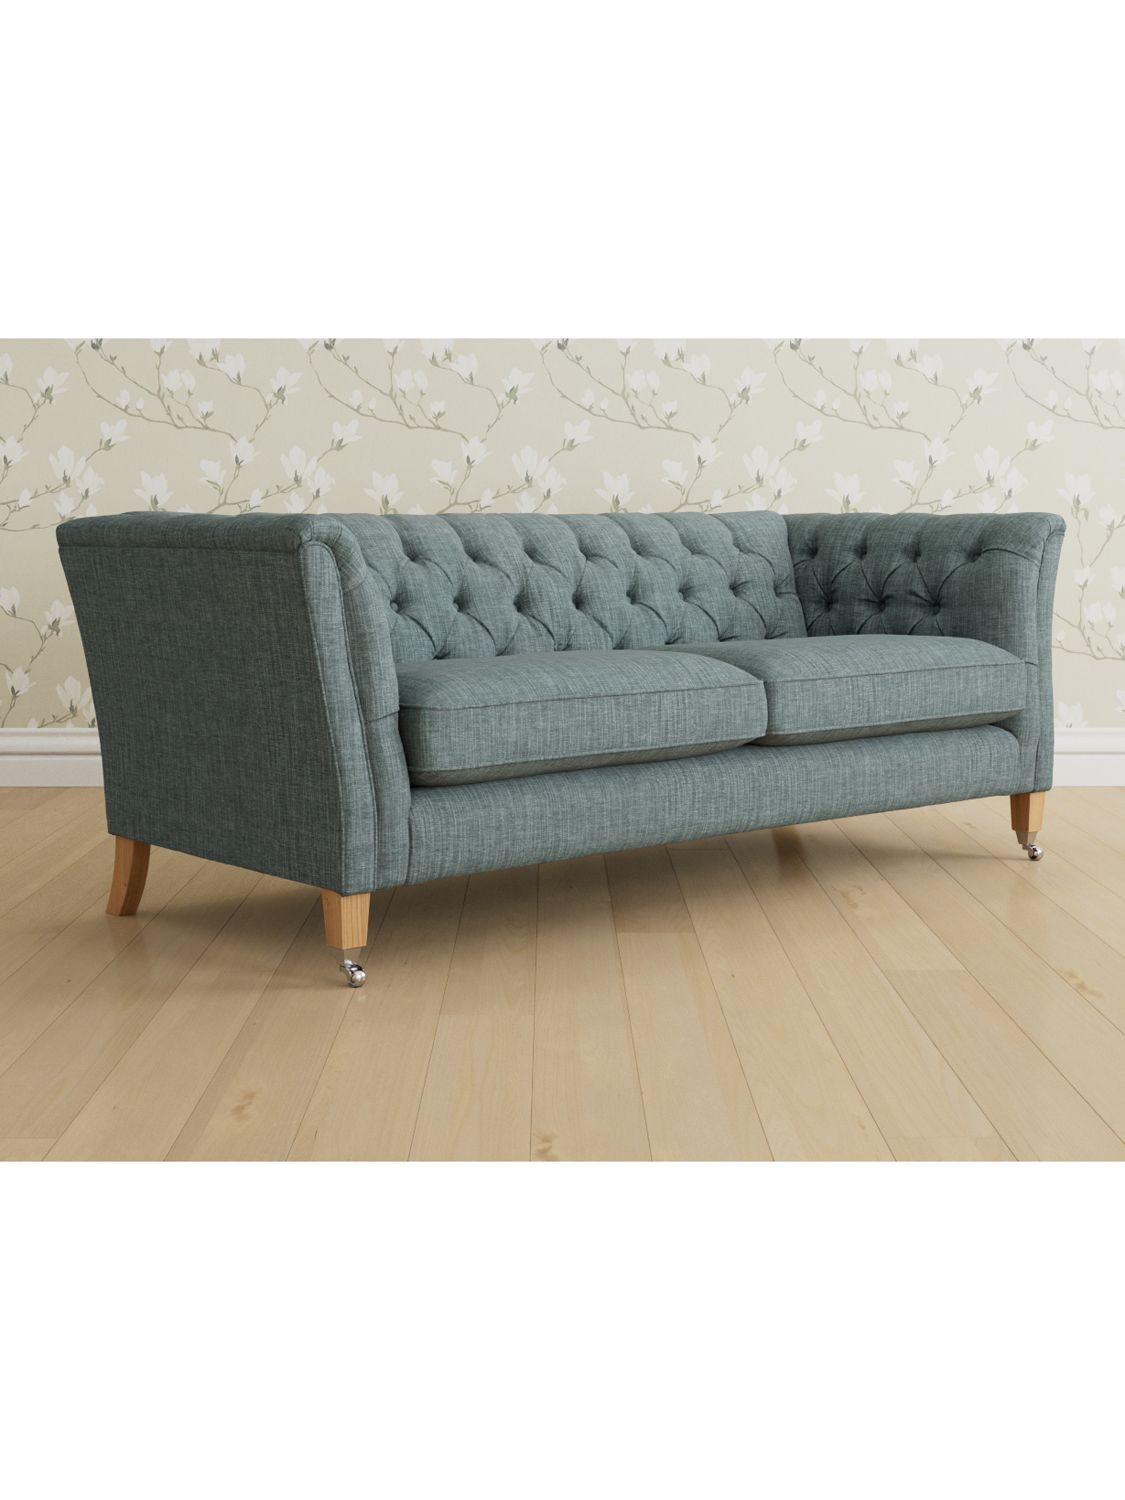 Chatsworth Range, Laura Ashley Chatsworth Large 3 Seater Sofa, Oak Leg, Bainton Newport Blue